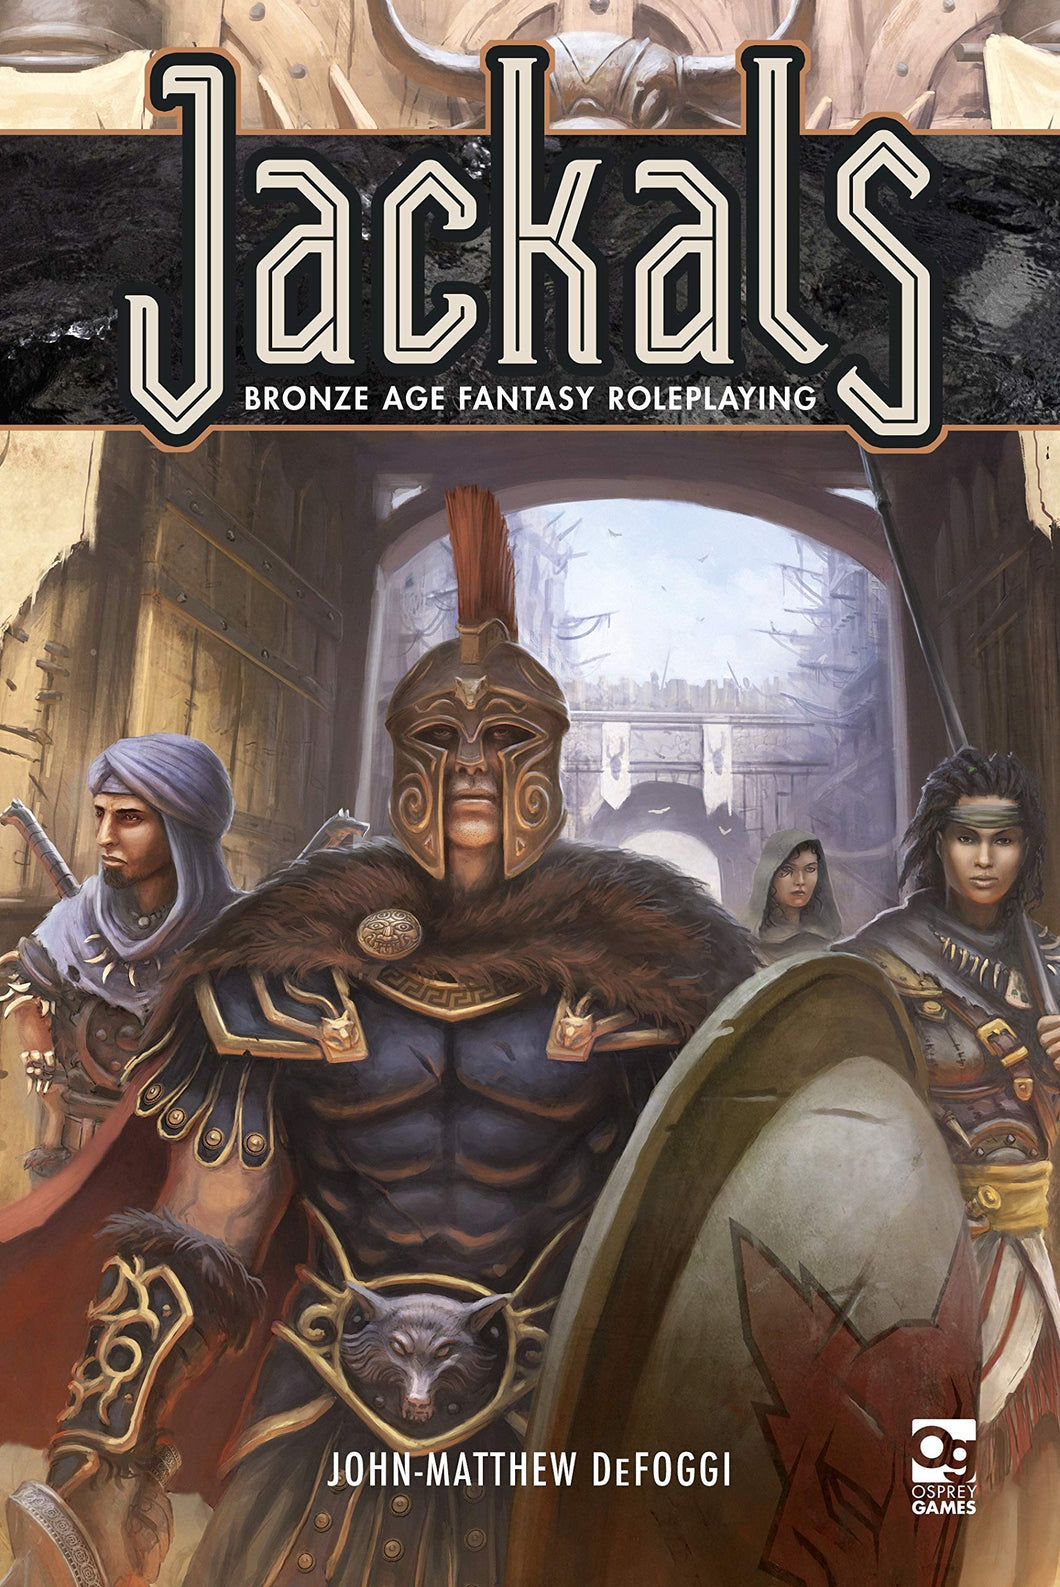 Jackals - Bronze Age Fantasy Roleplaying